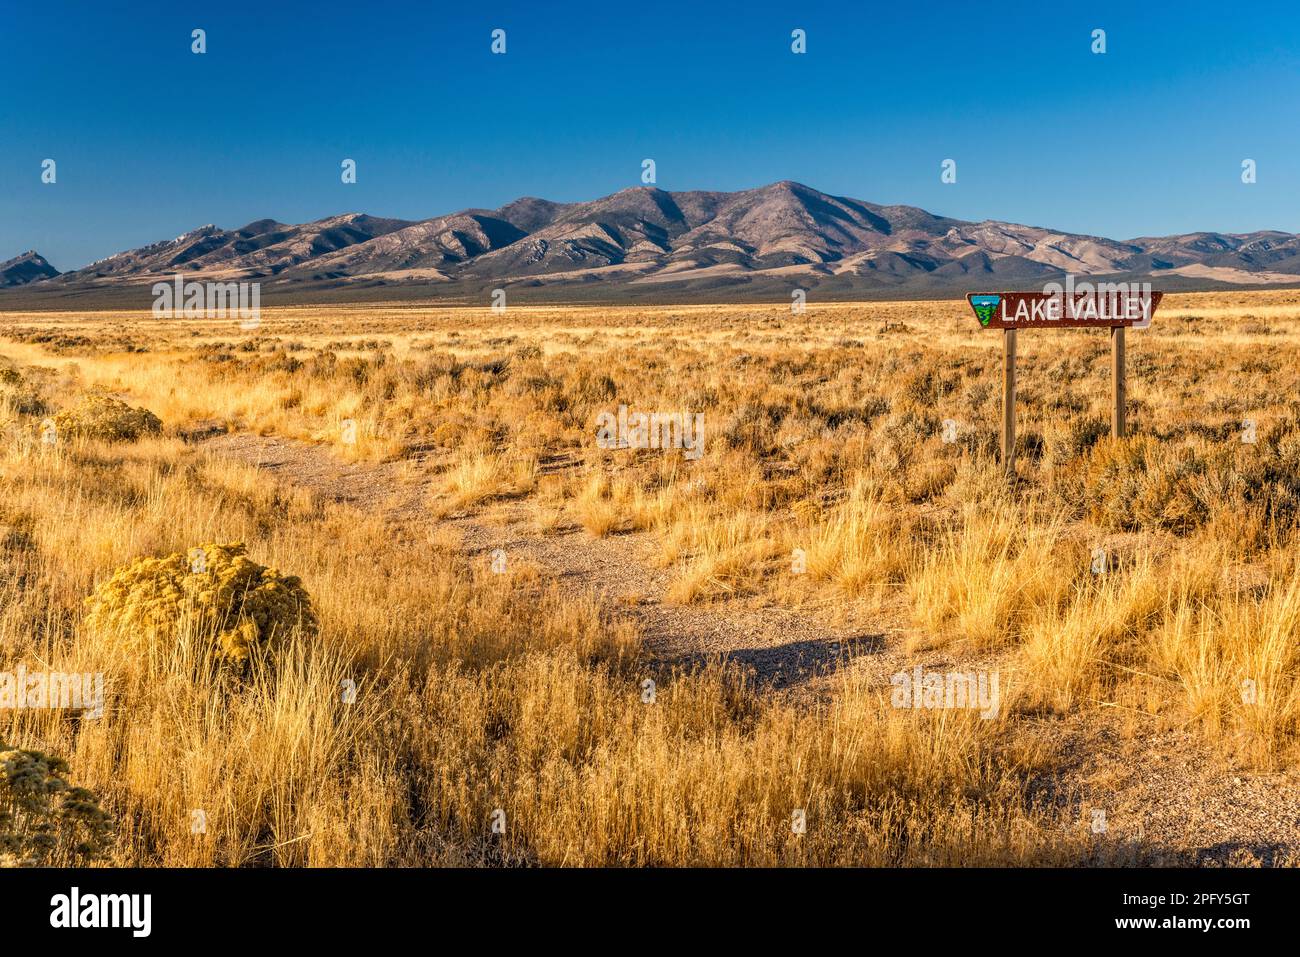 Schell Creek Range, rabbitbush, Indian ricegrass, name sign, view from Great Basin Highway (US 93), Lake Valley, Great Basin, Nevada, USA Stock Photo